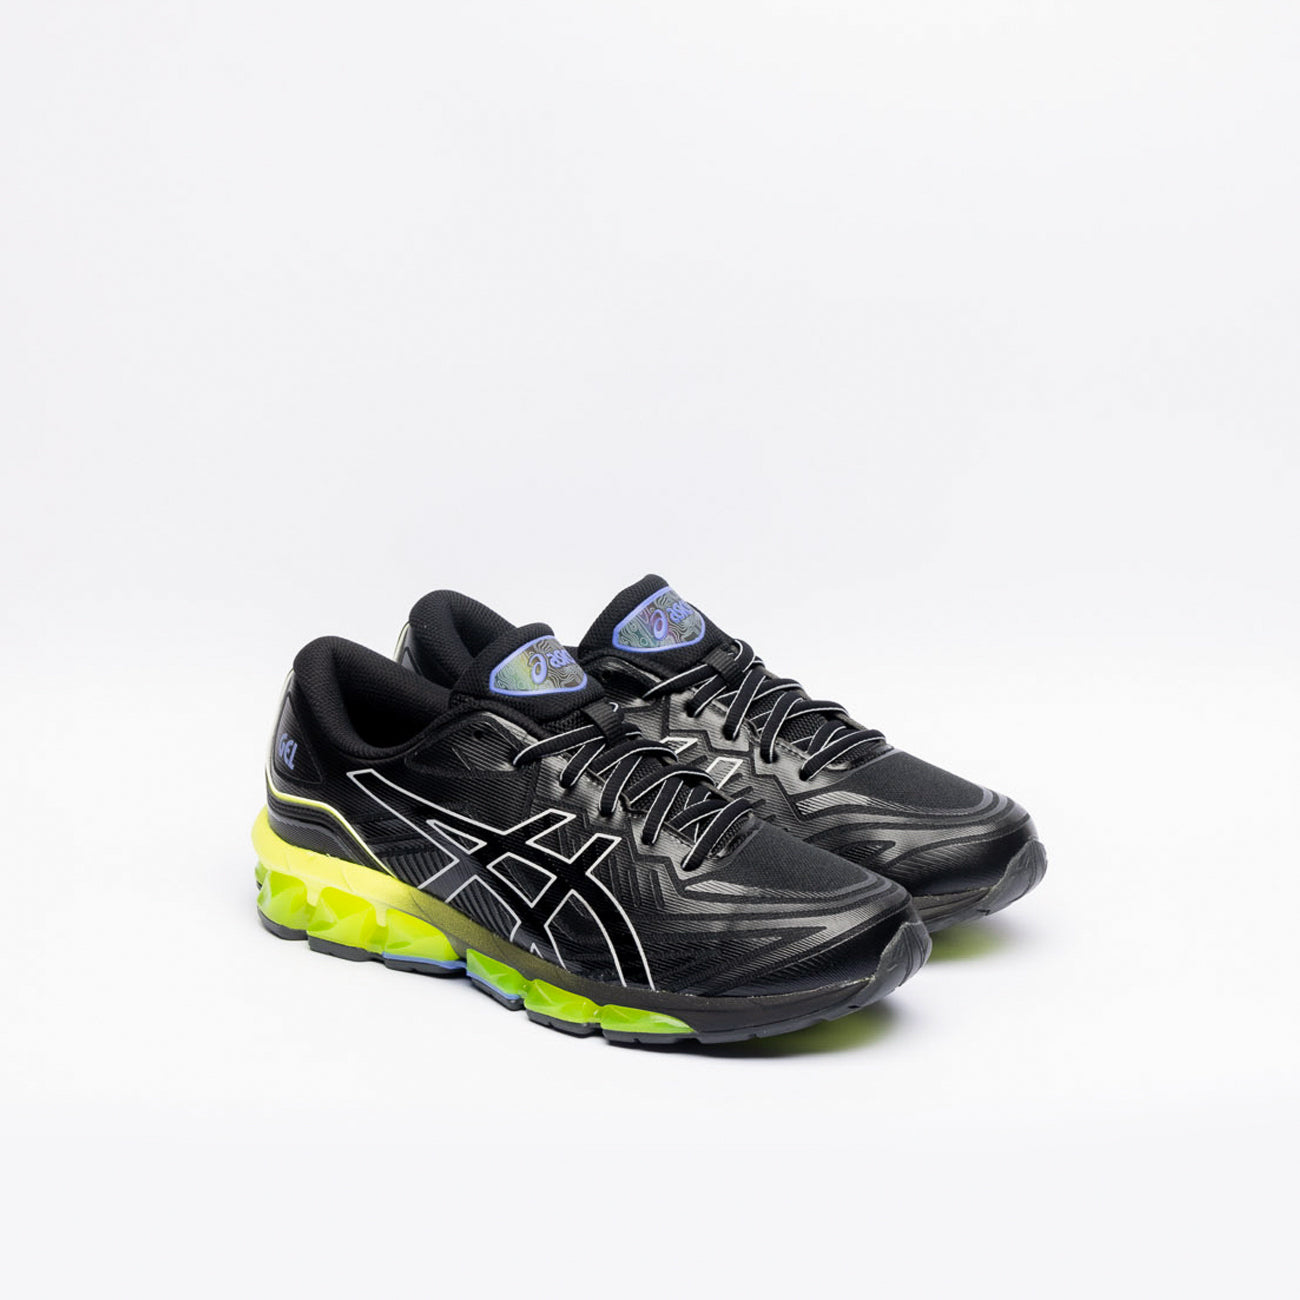 Running sneaker Asics Gel Quantum 360 VII in black fabric and fluorescent yellow gel